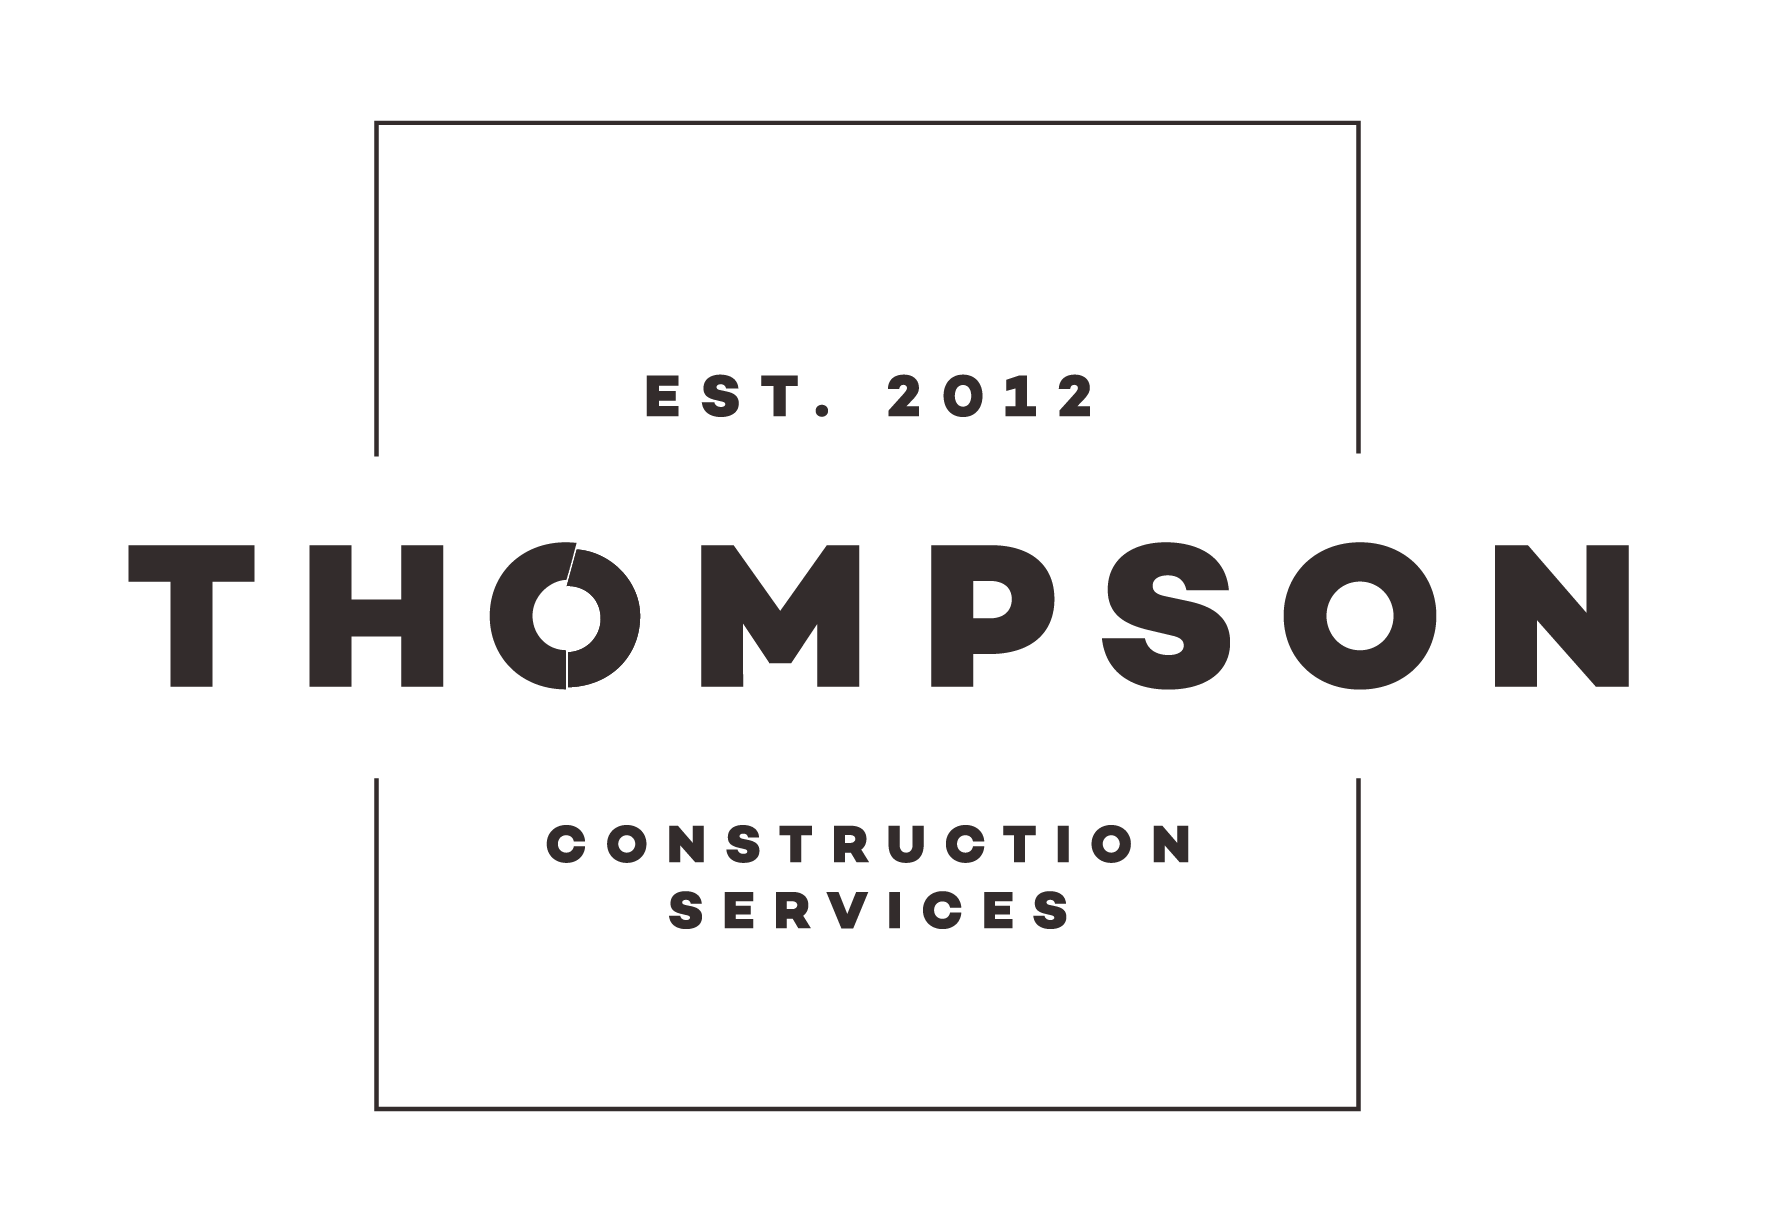 Thompson Construction Services